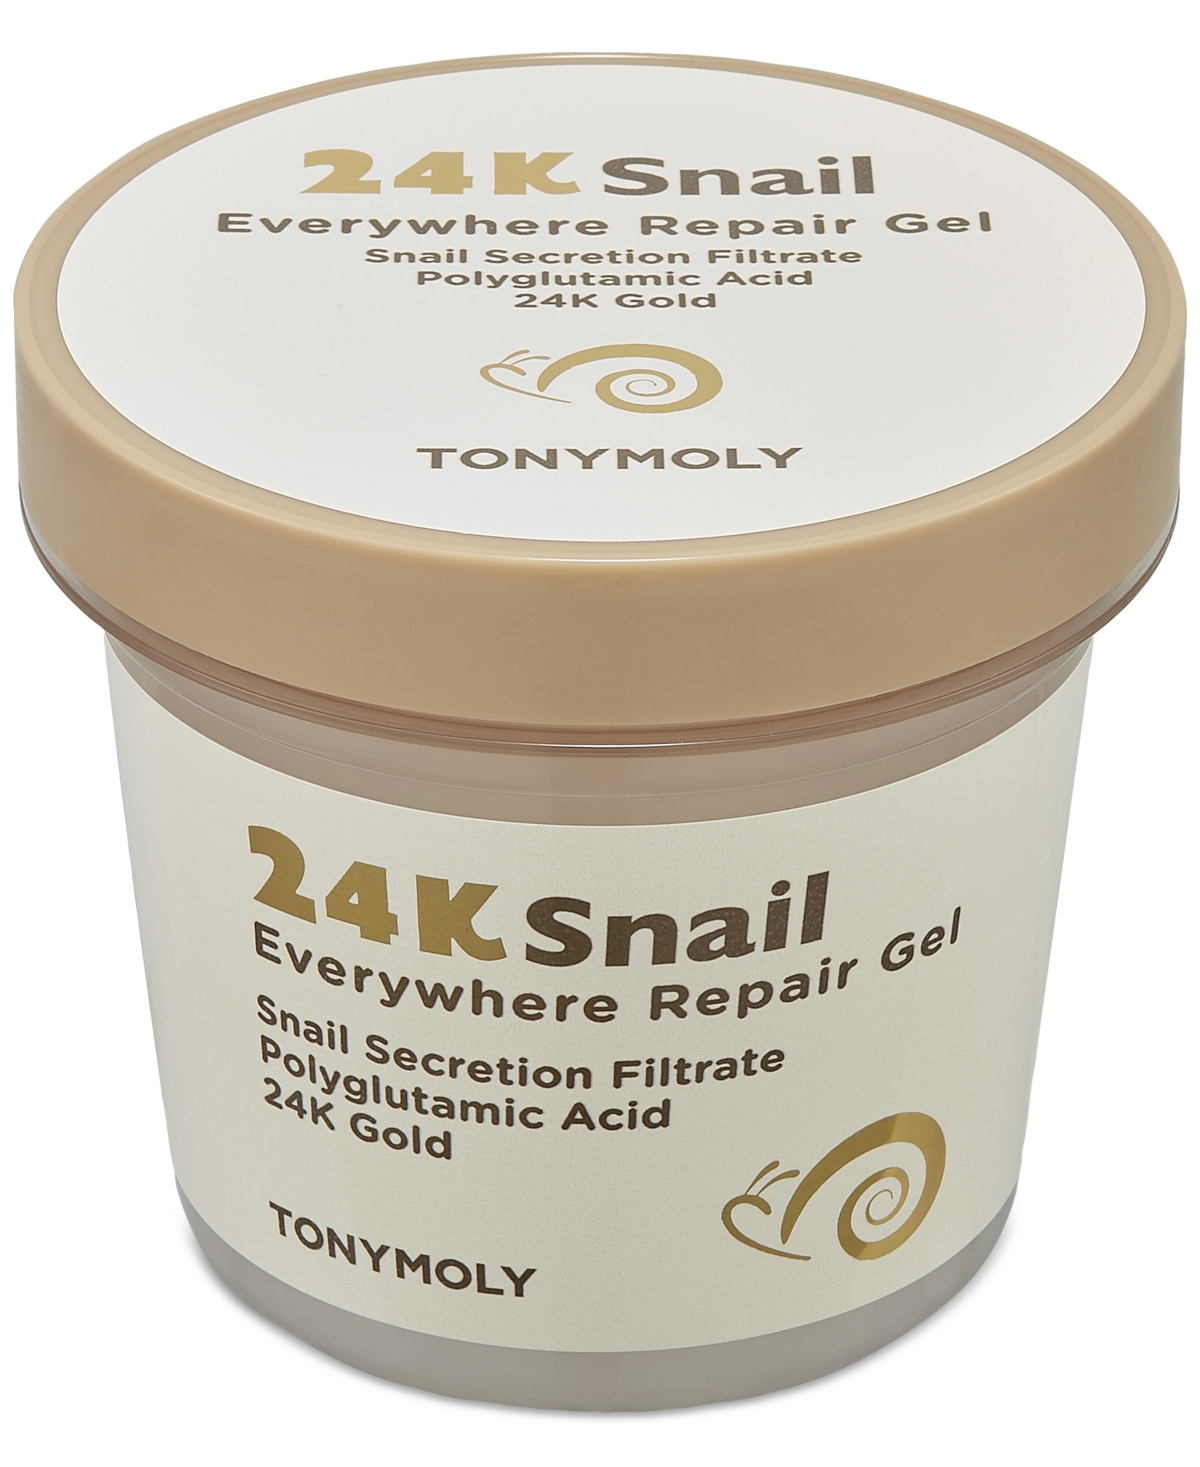 Tonymoly 24k Snail Everywhere Repair Gel In No Color